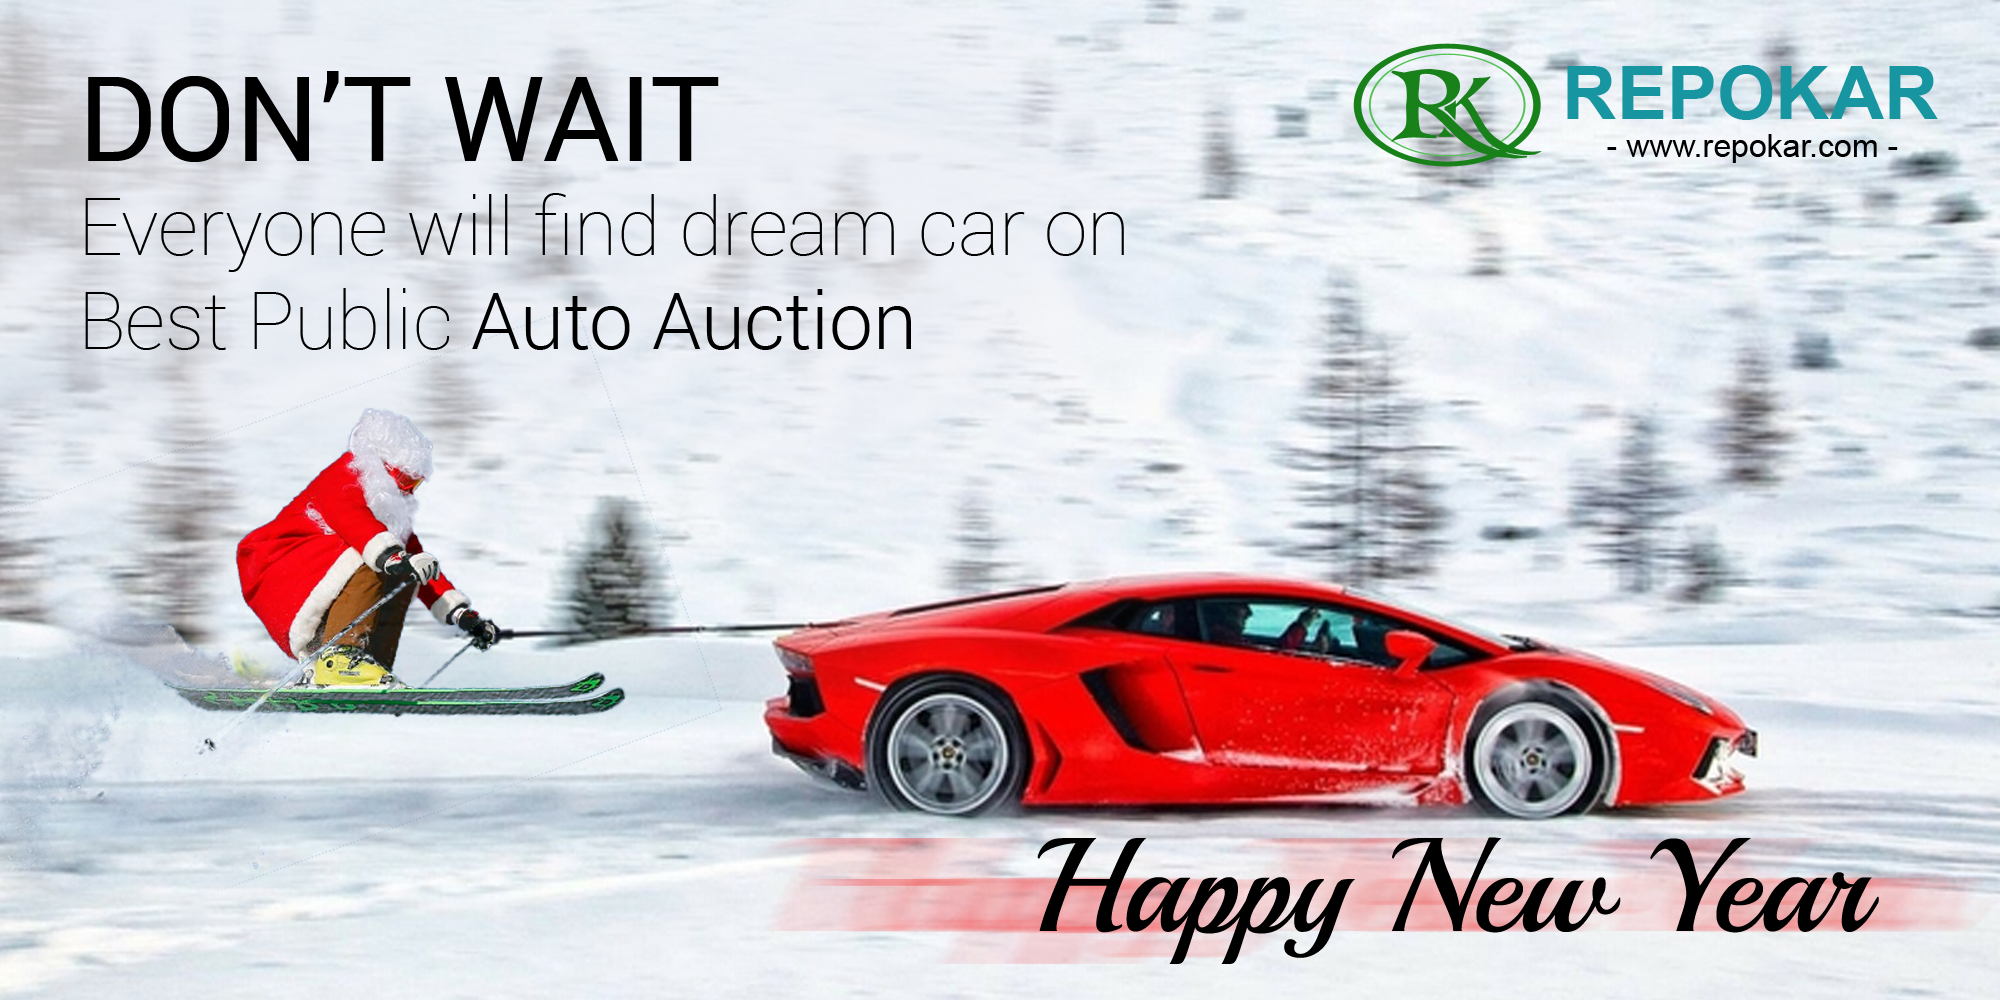 new year, new year wish, auto auction, byu car, car auction, best new year wish